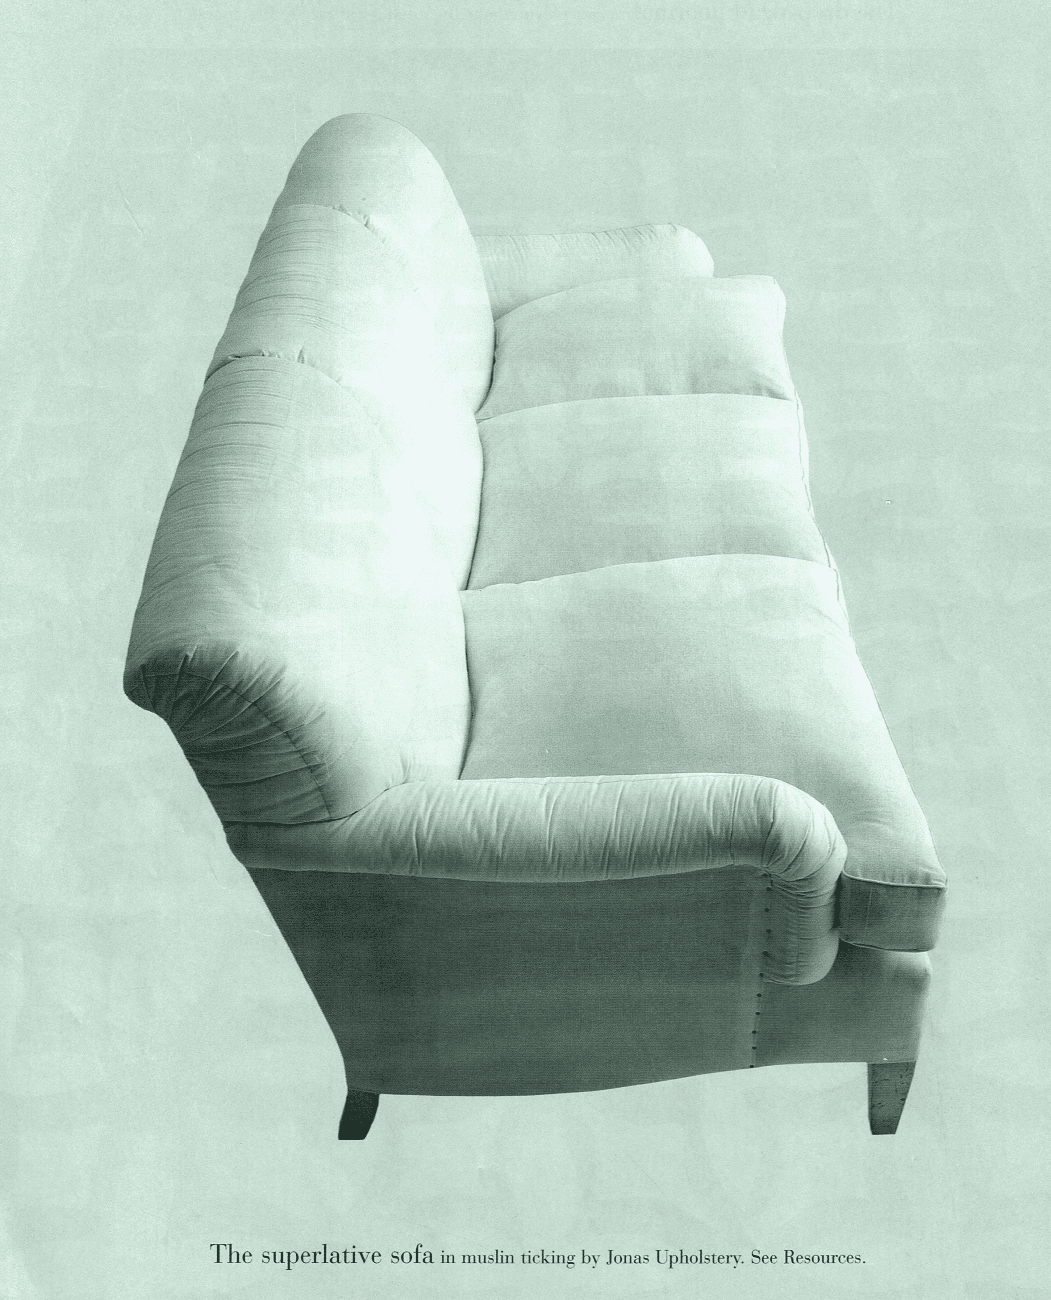 Jonas Upholstery - custom high-end sofa - Interior Design Business Practices